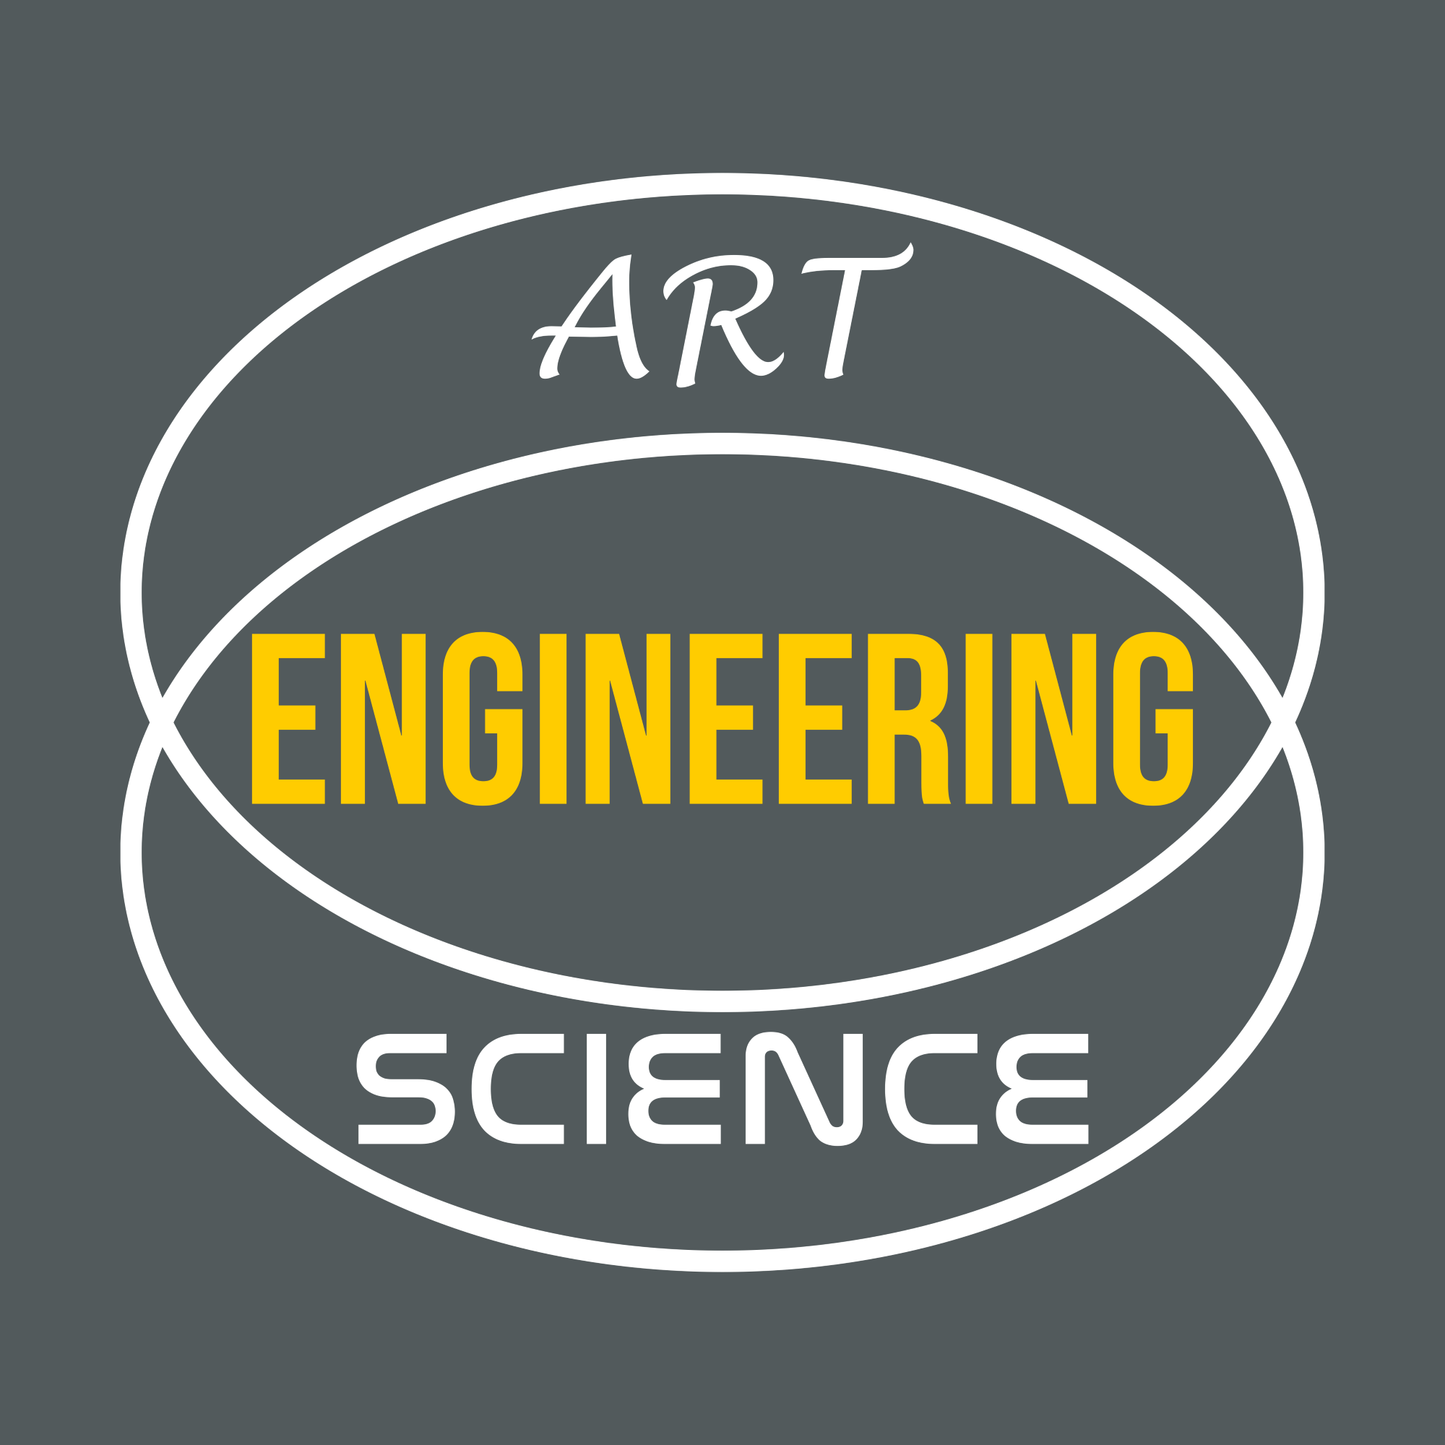 Diagrama de Venn de ingeniería